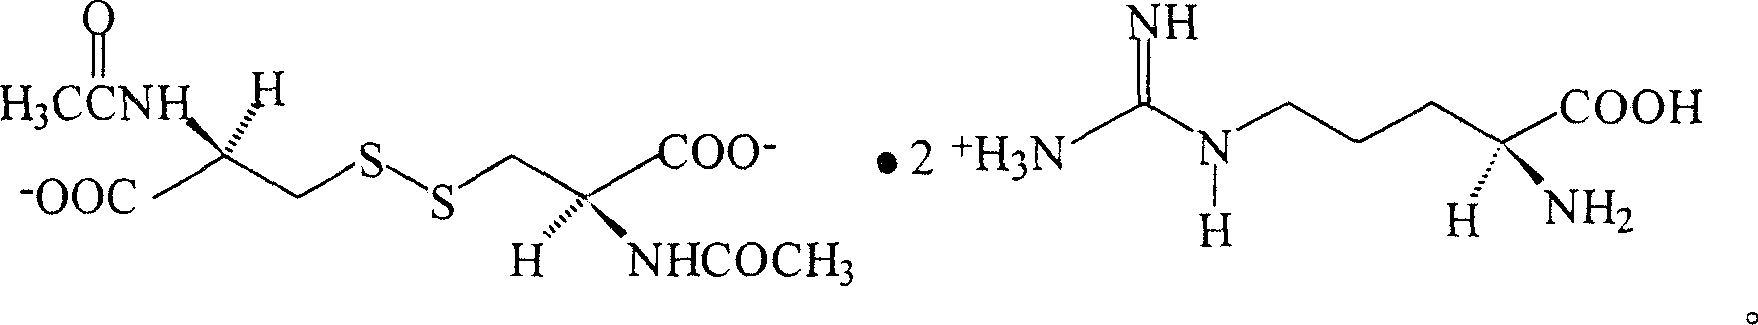 N,N'-biacetylcysteine-diarginine salt isomer and its uses